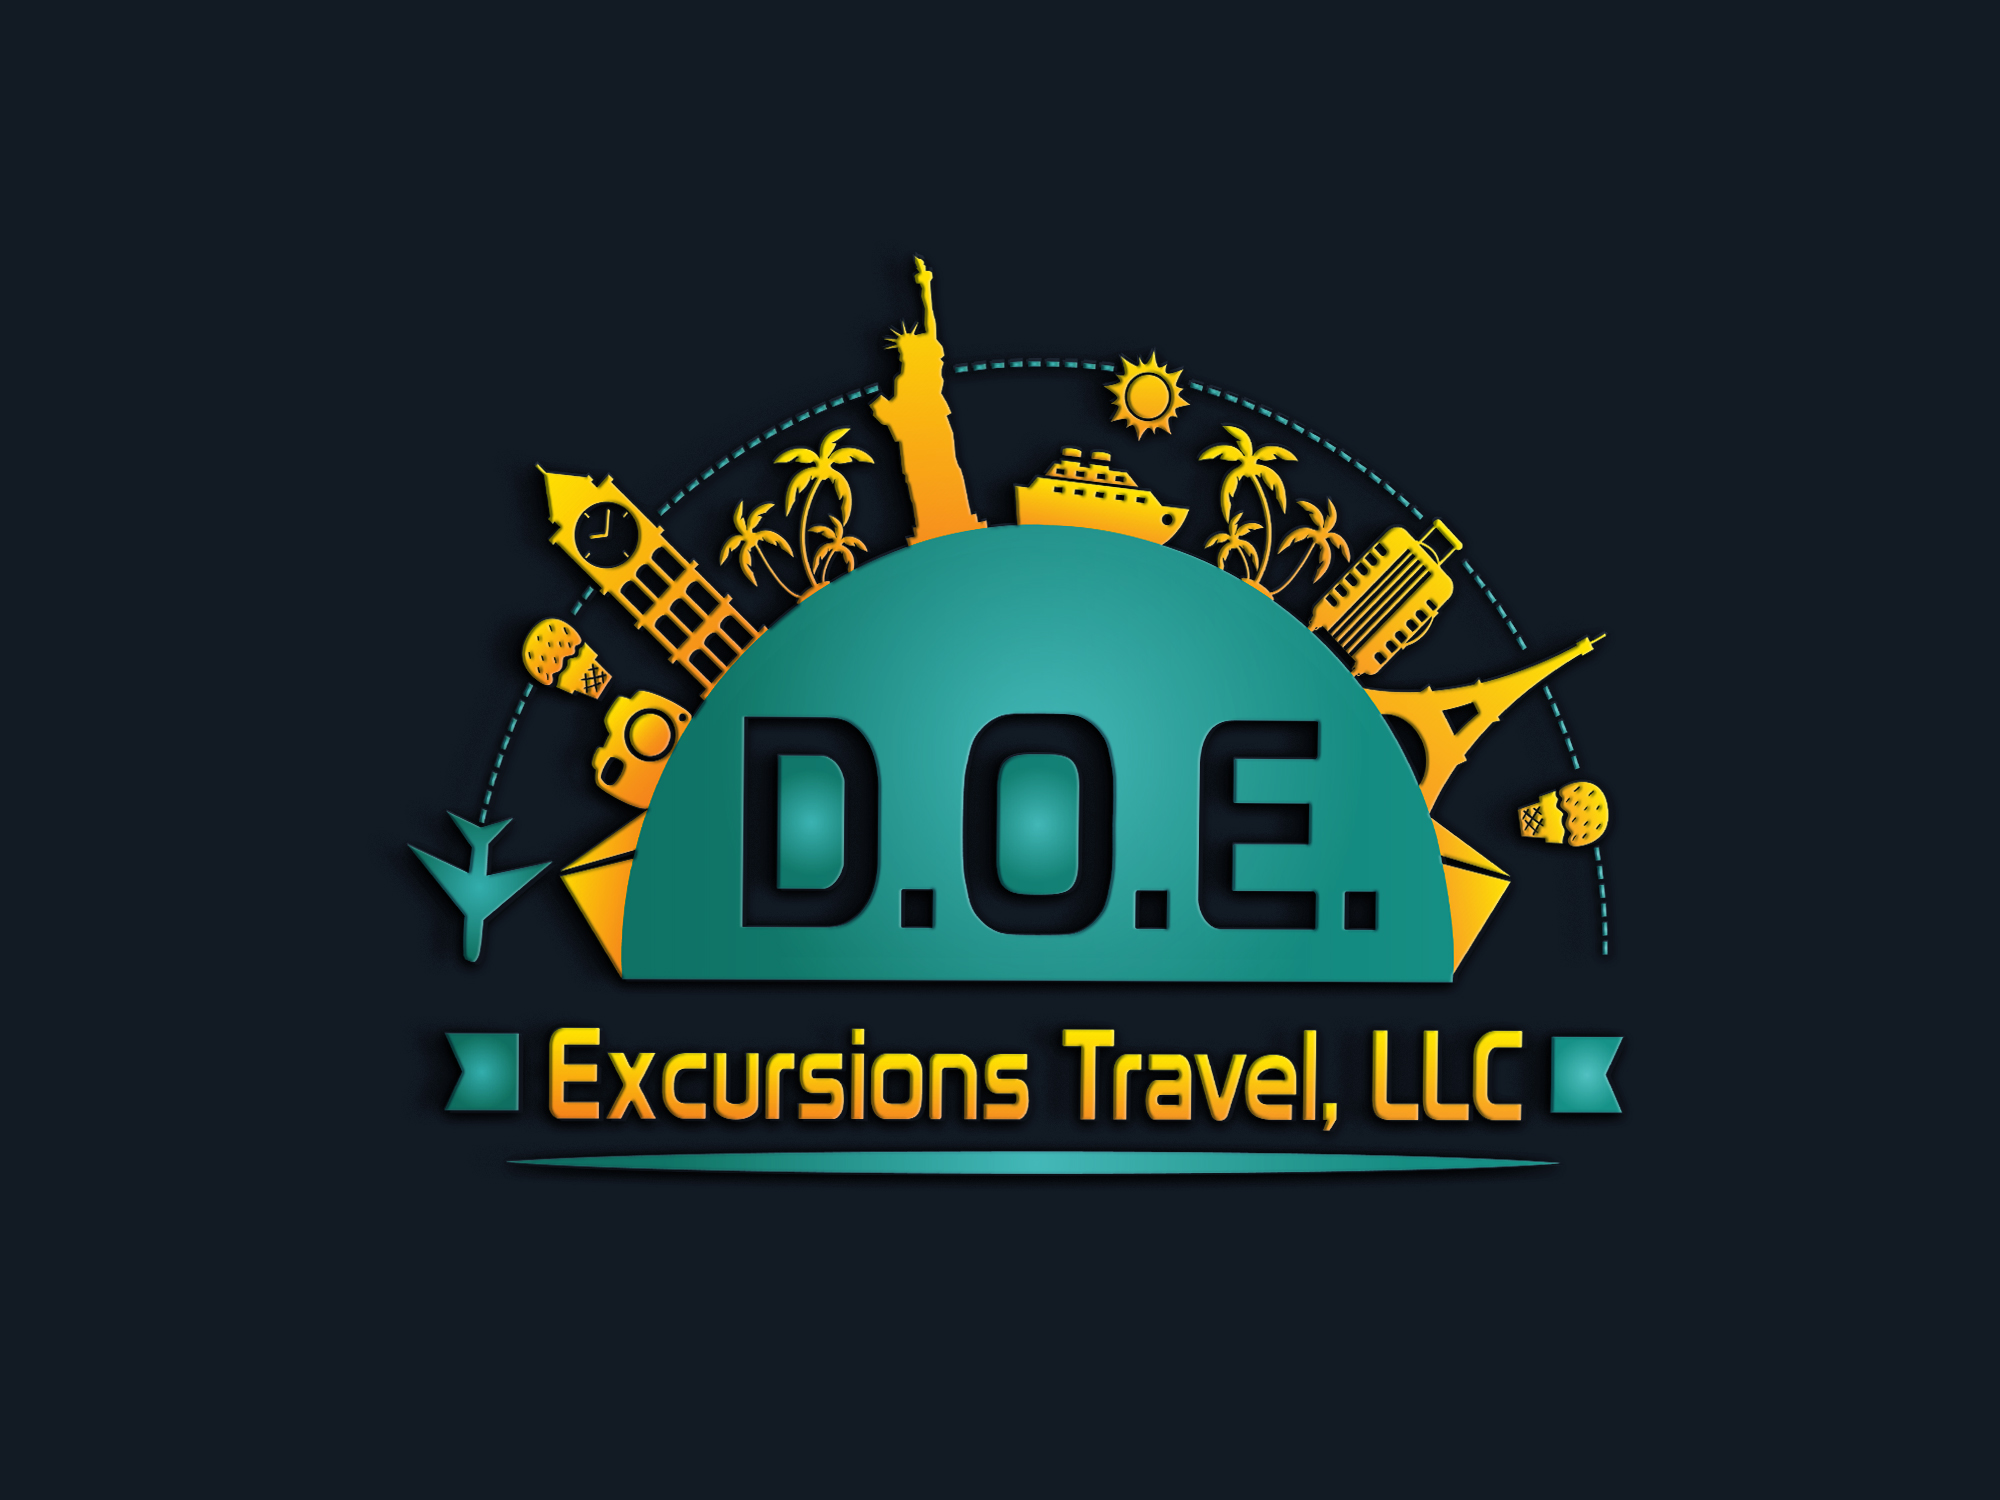 d.o.e. excursions travel llc